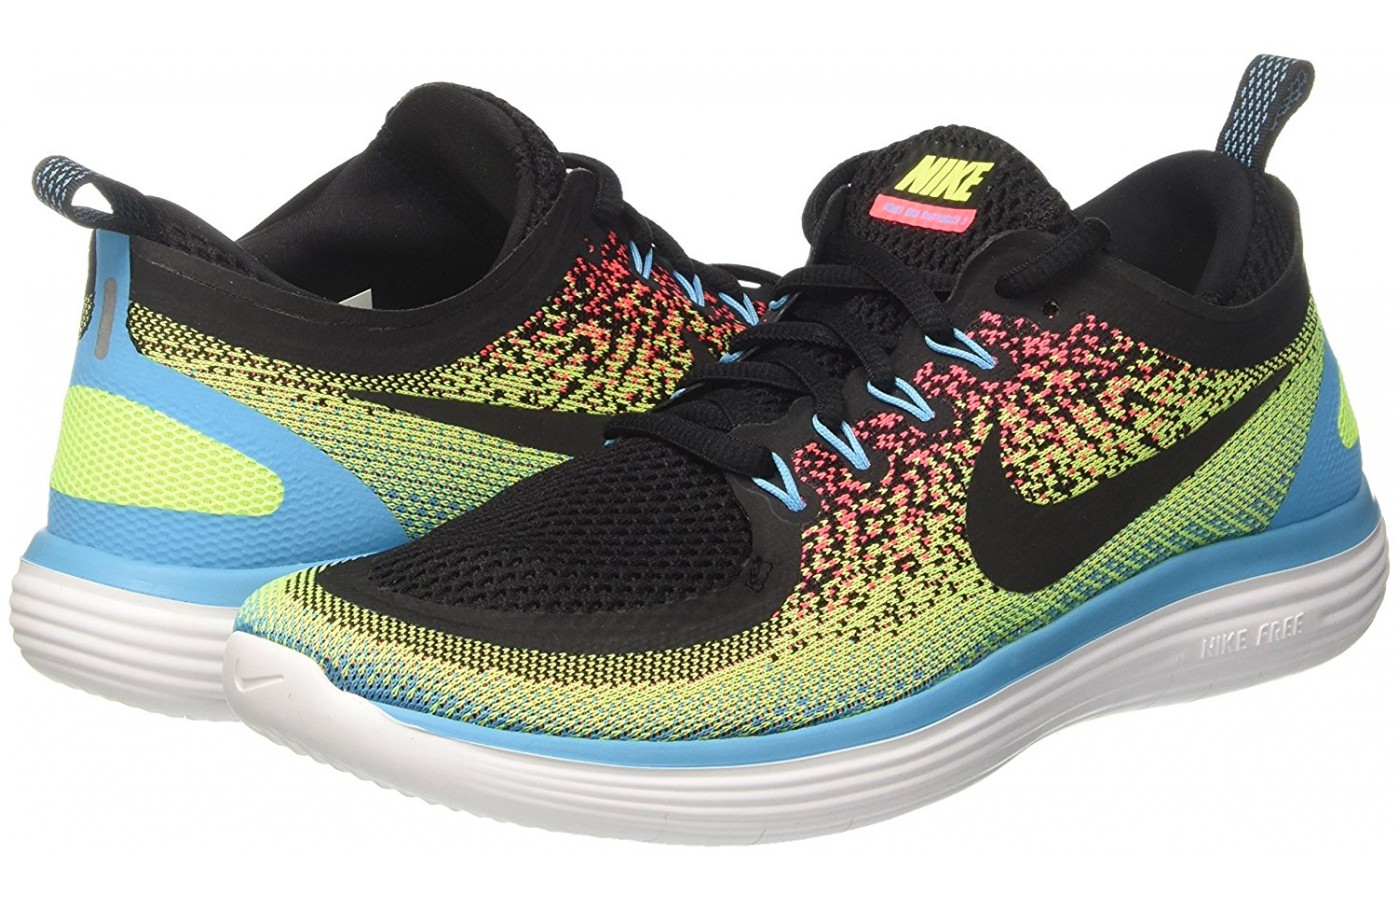 Nike Free RN Distance 2 pair